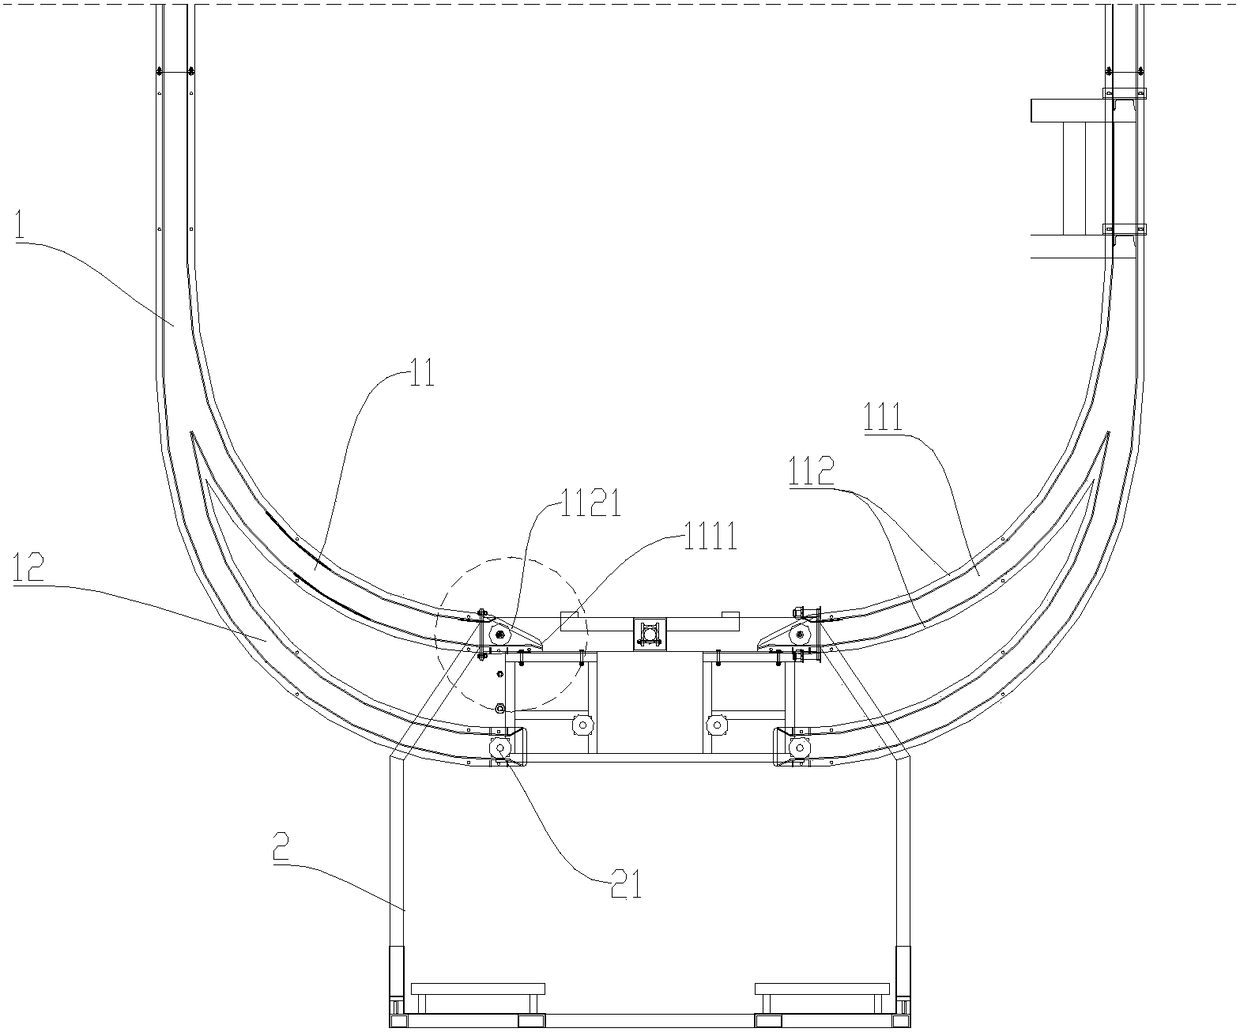 Slope mechanism for anti-swing track of vertical circulating garage